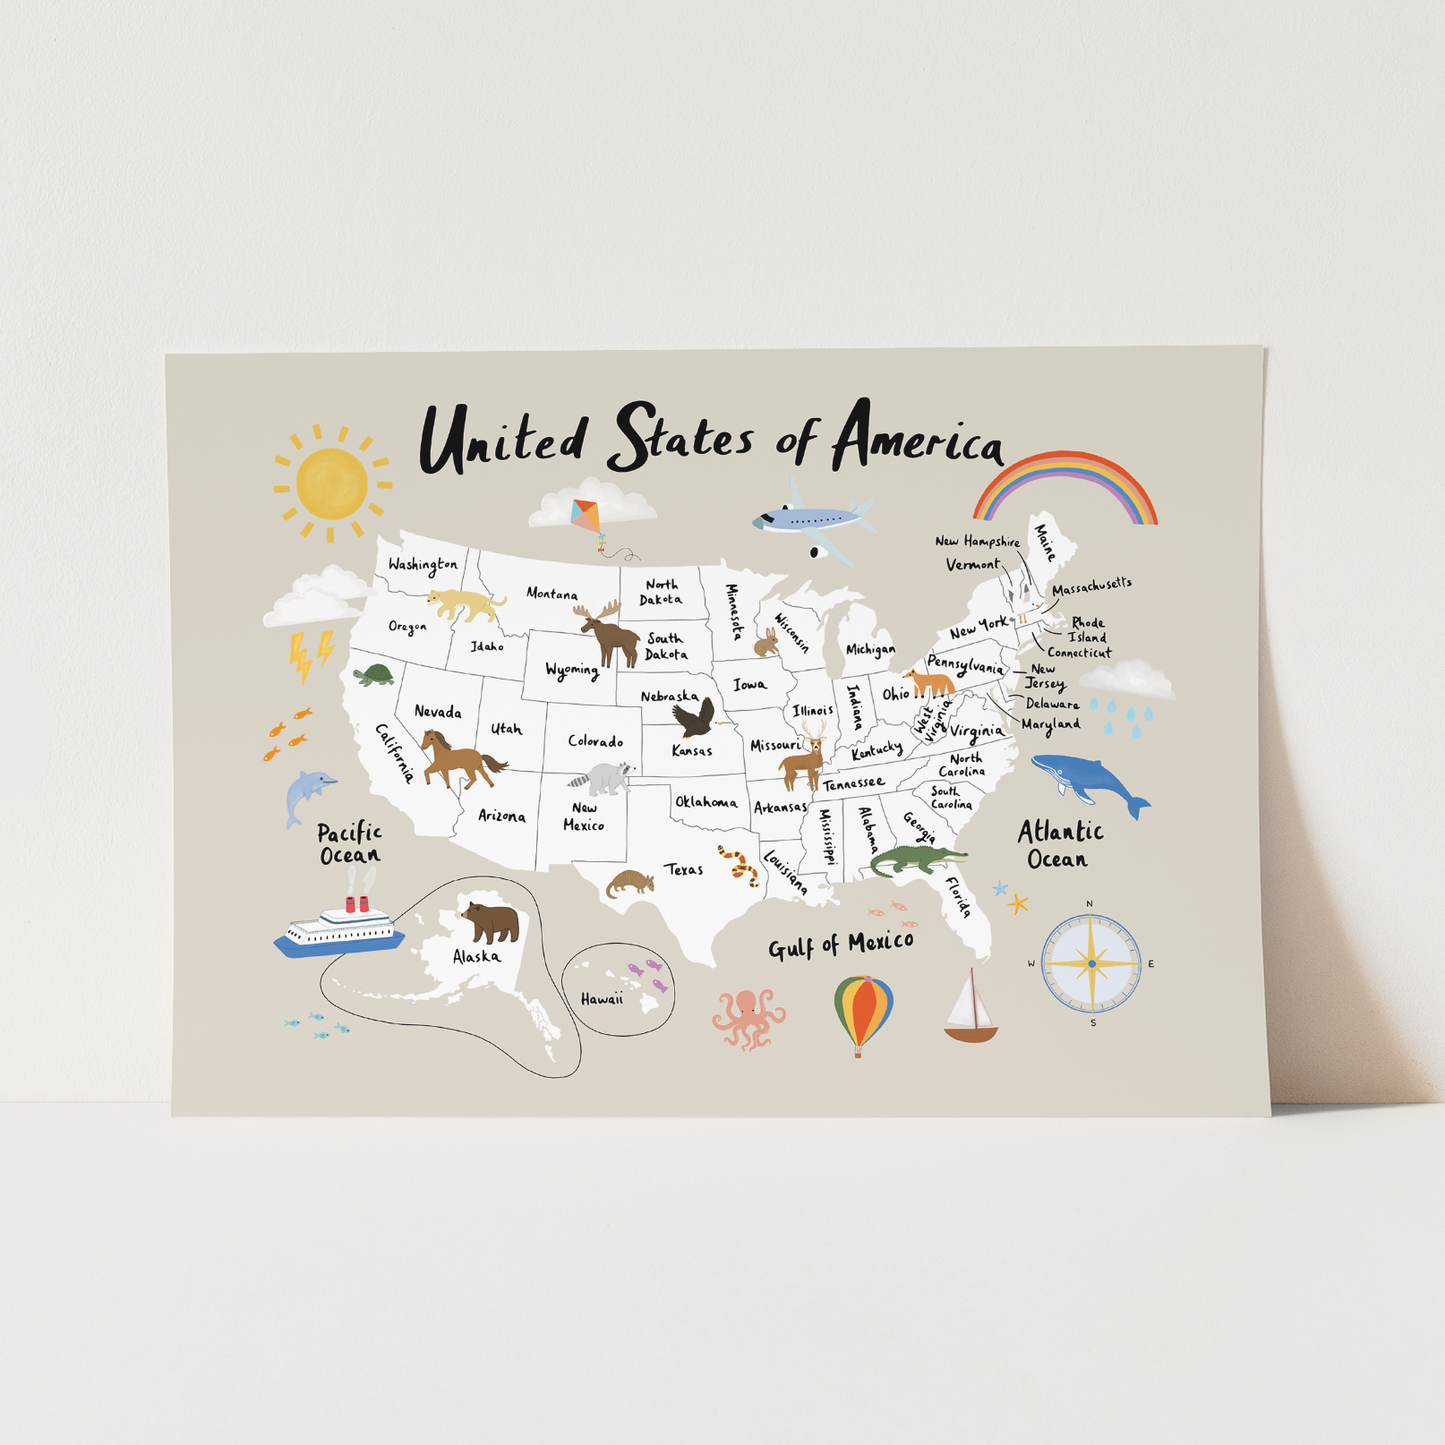 United States of America in stone / Fine Art Print